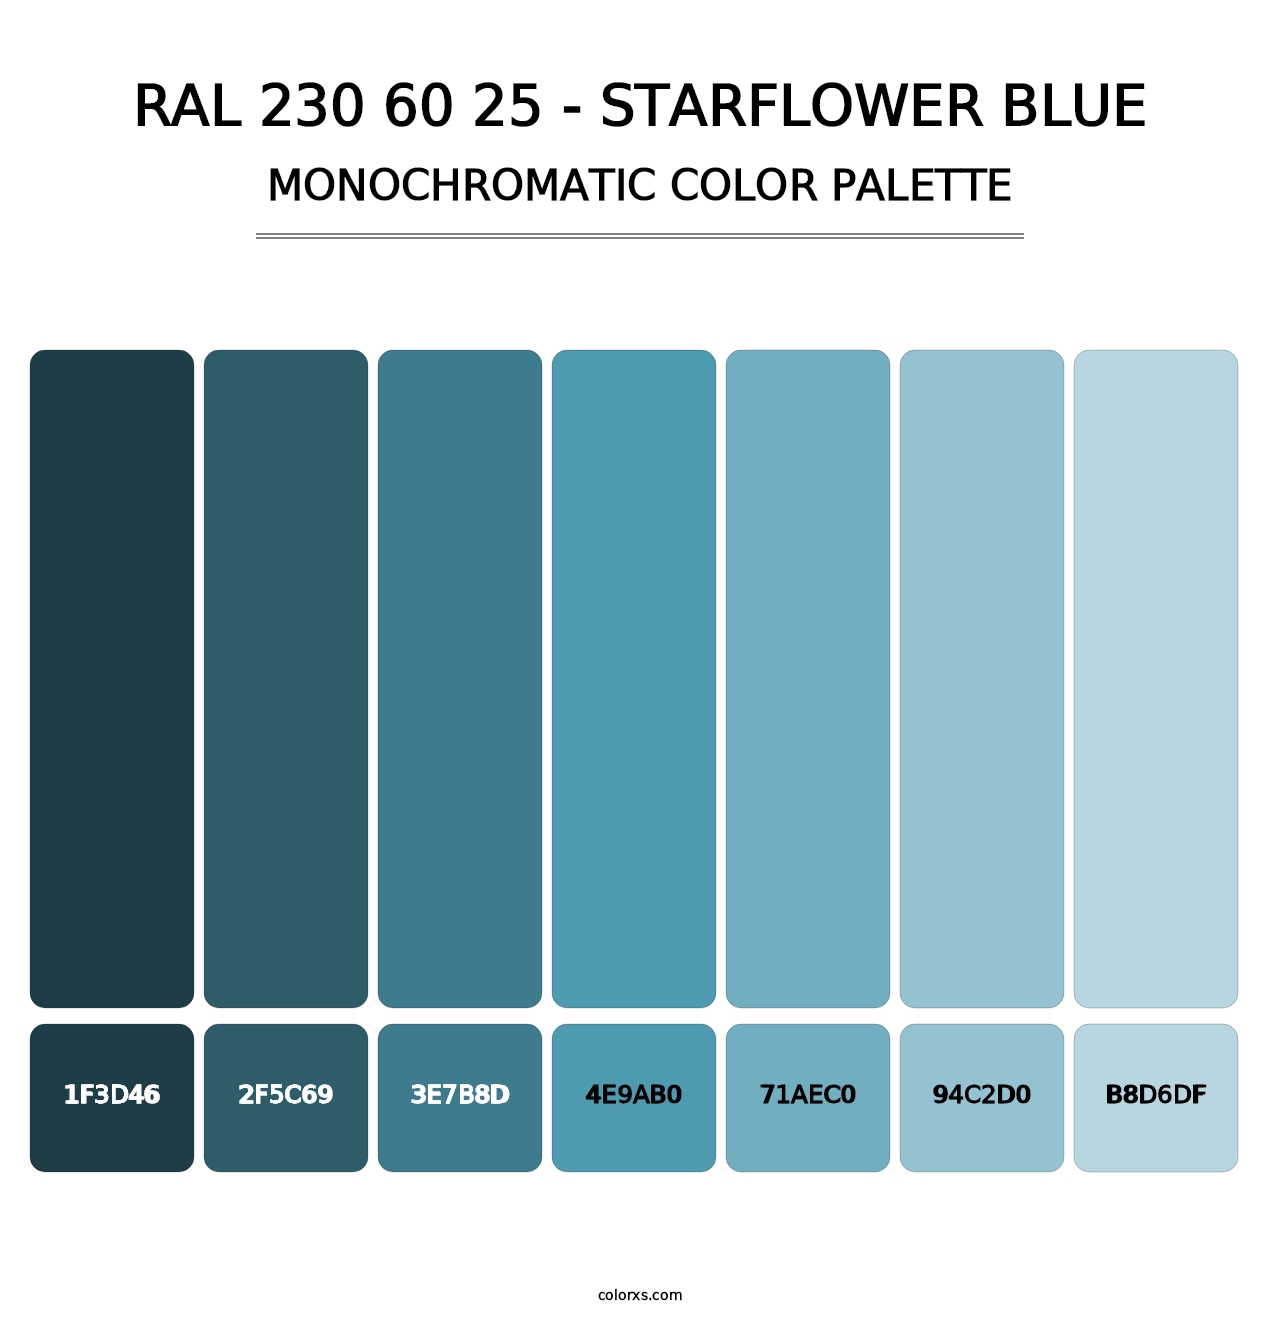 RAL 230 60 25 - Starflower Blue - Monochromatic Color Palette